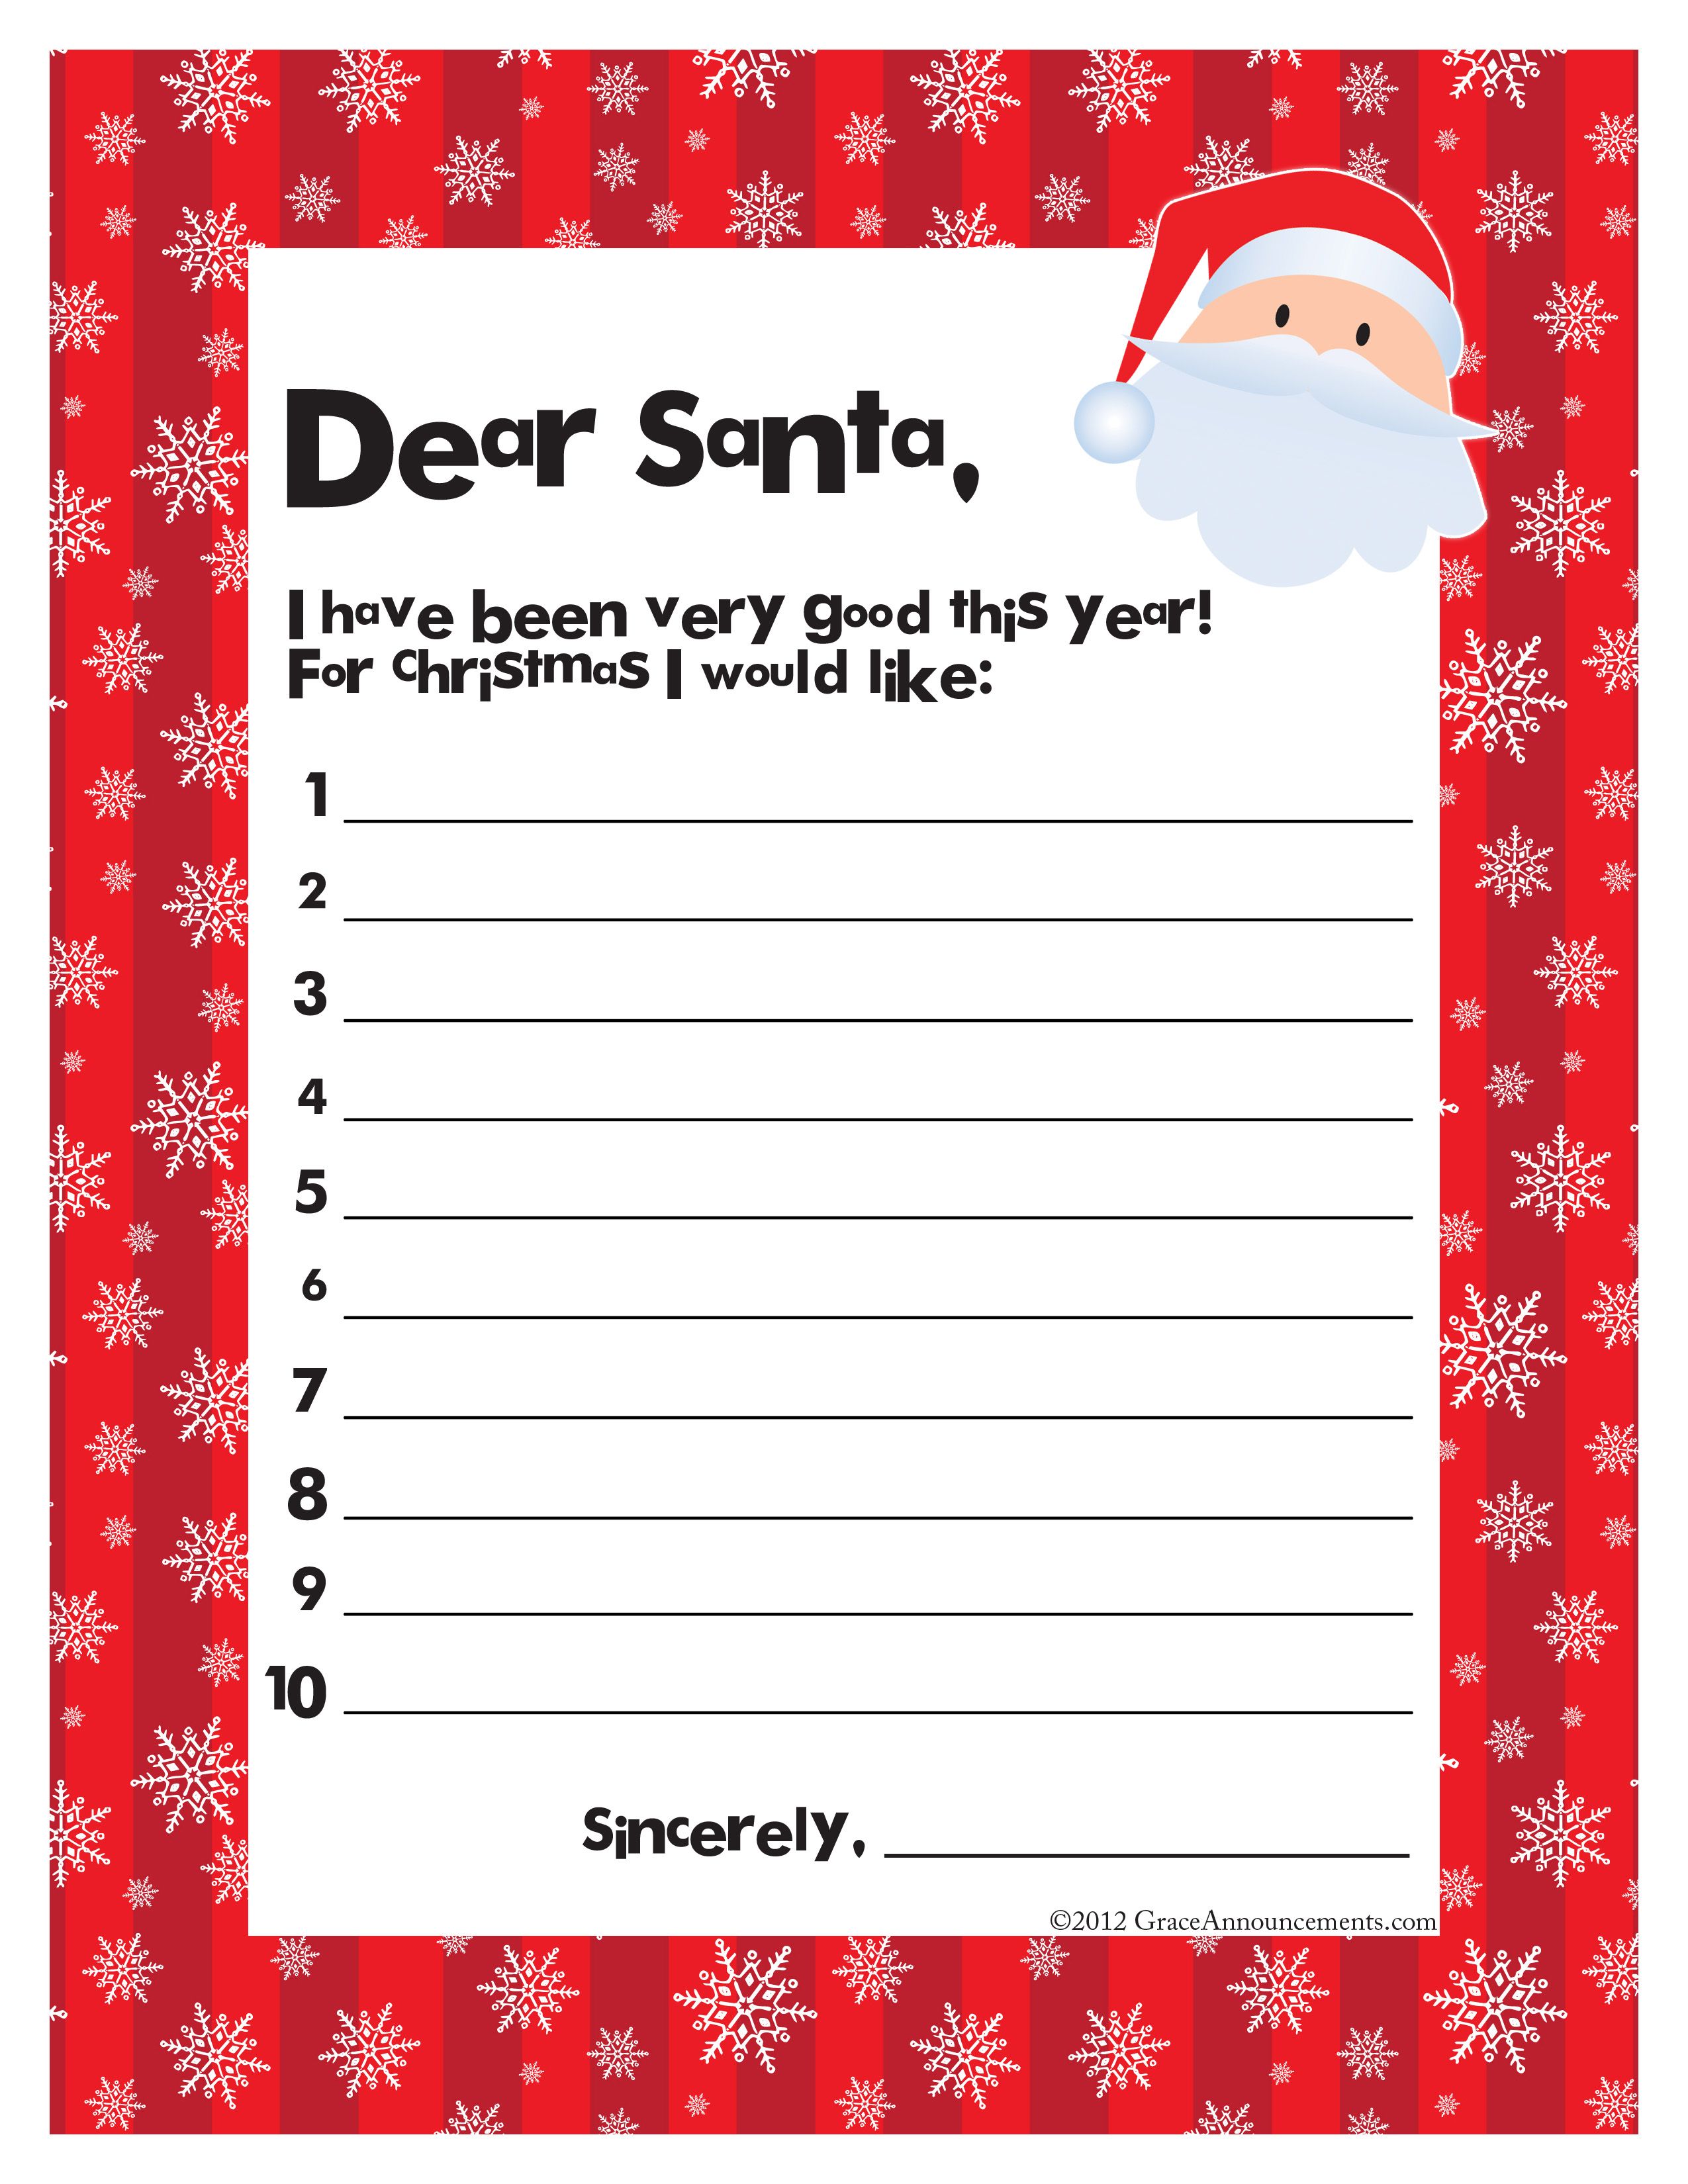 Dear Santa letter | Elf | Pinterest | Printable letters, Santa and ...